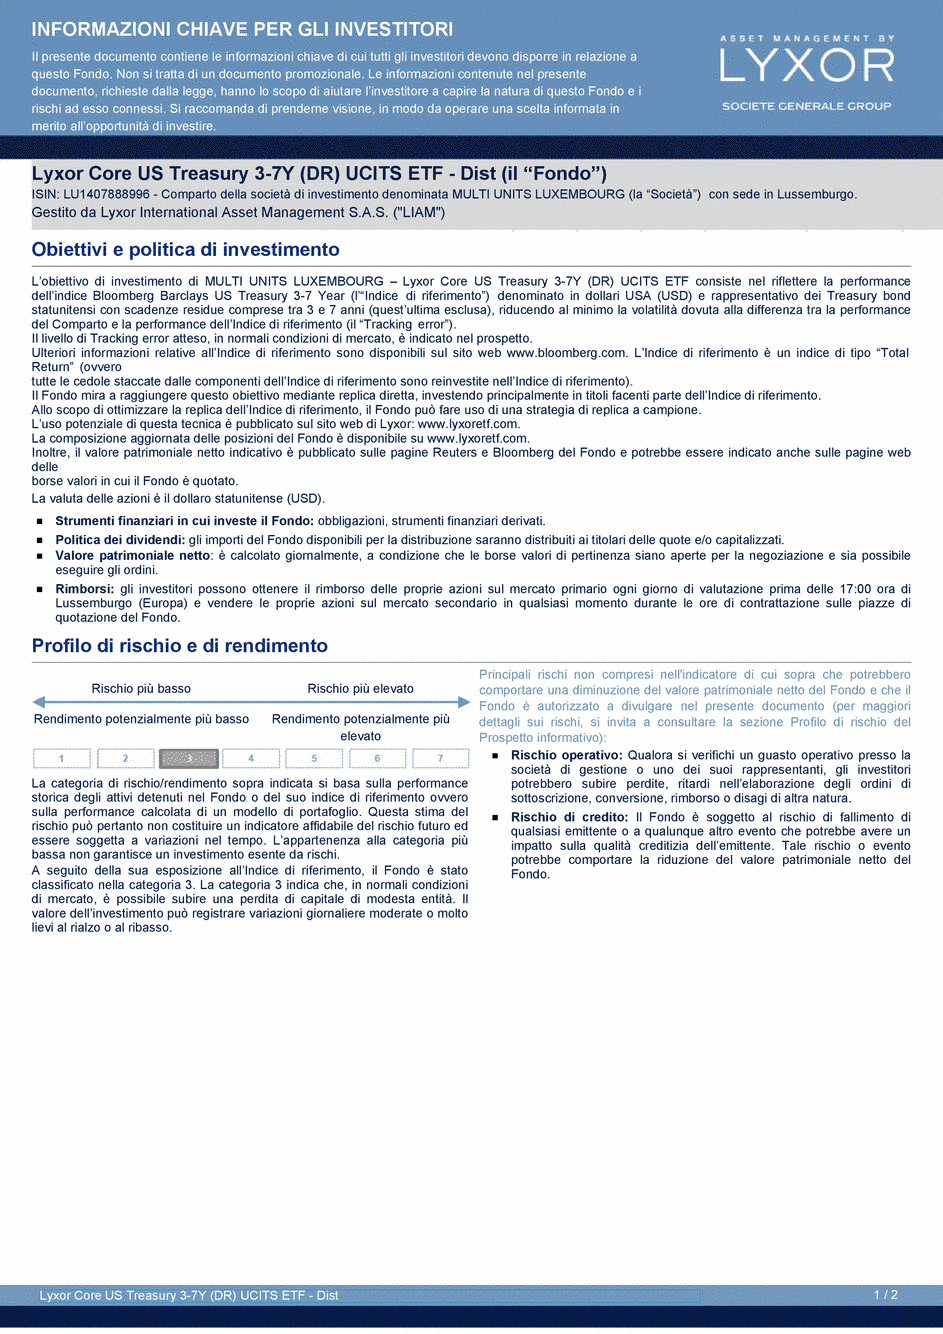 DICI Lyxor Core US Treasury 3-7Y (DR) UCITS ETF - Dist - 20/04/2020 - Italien